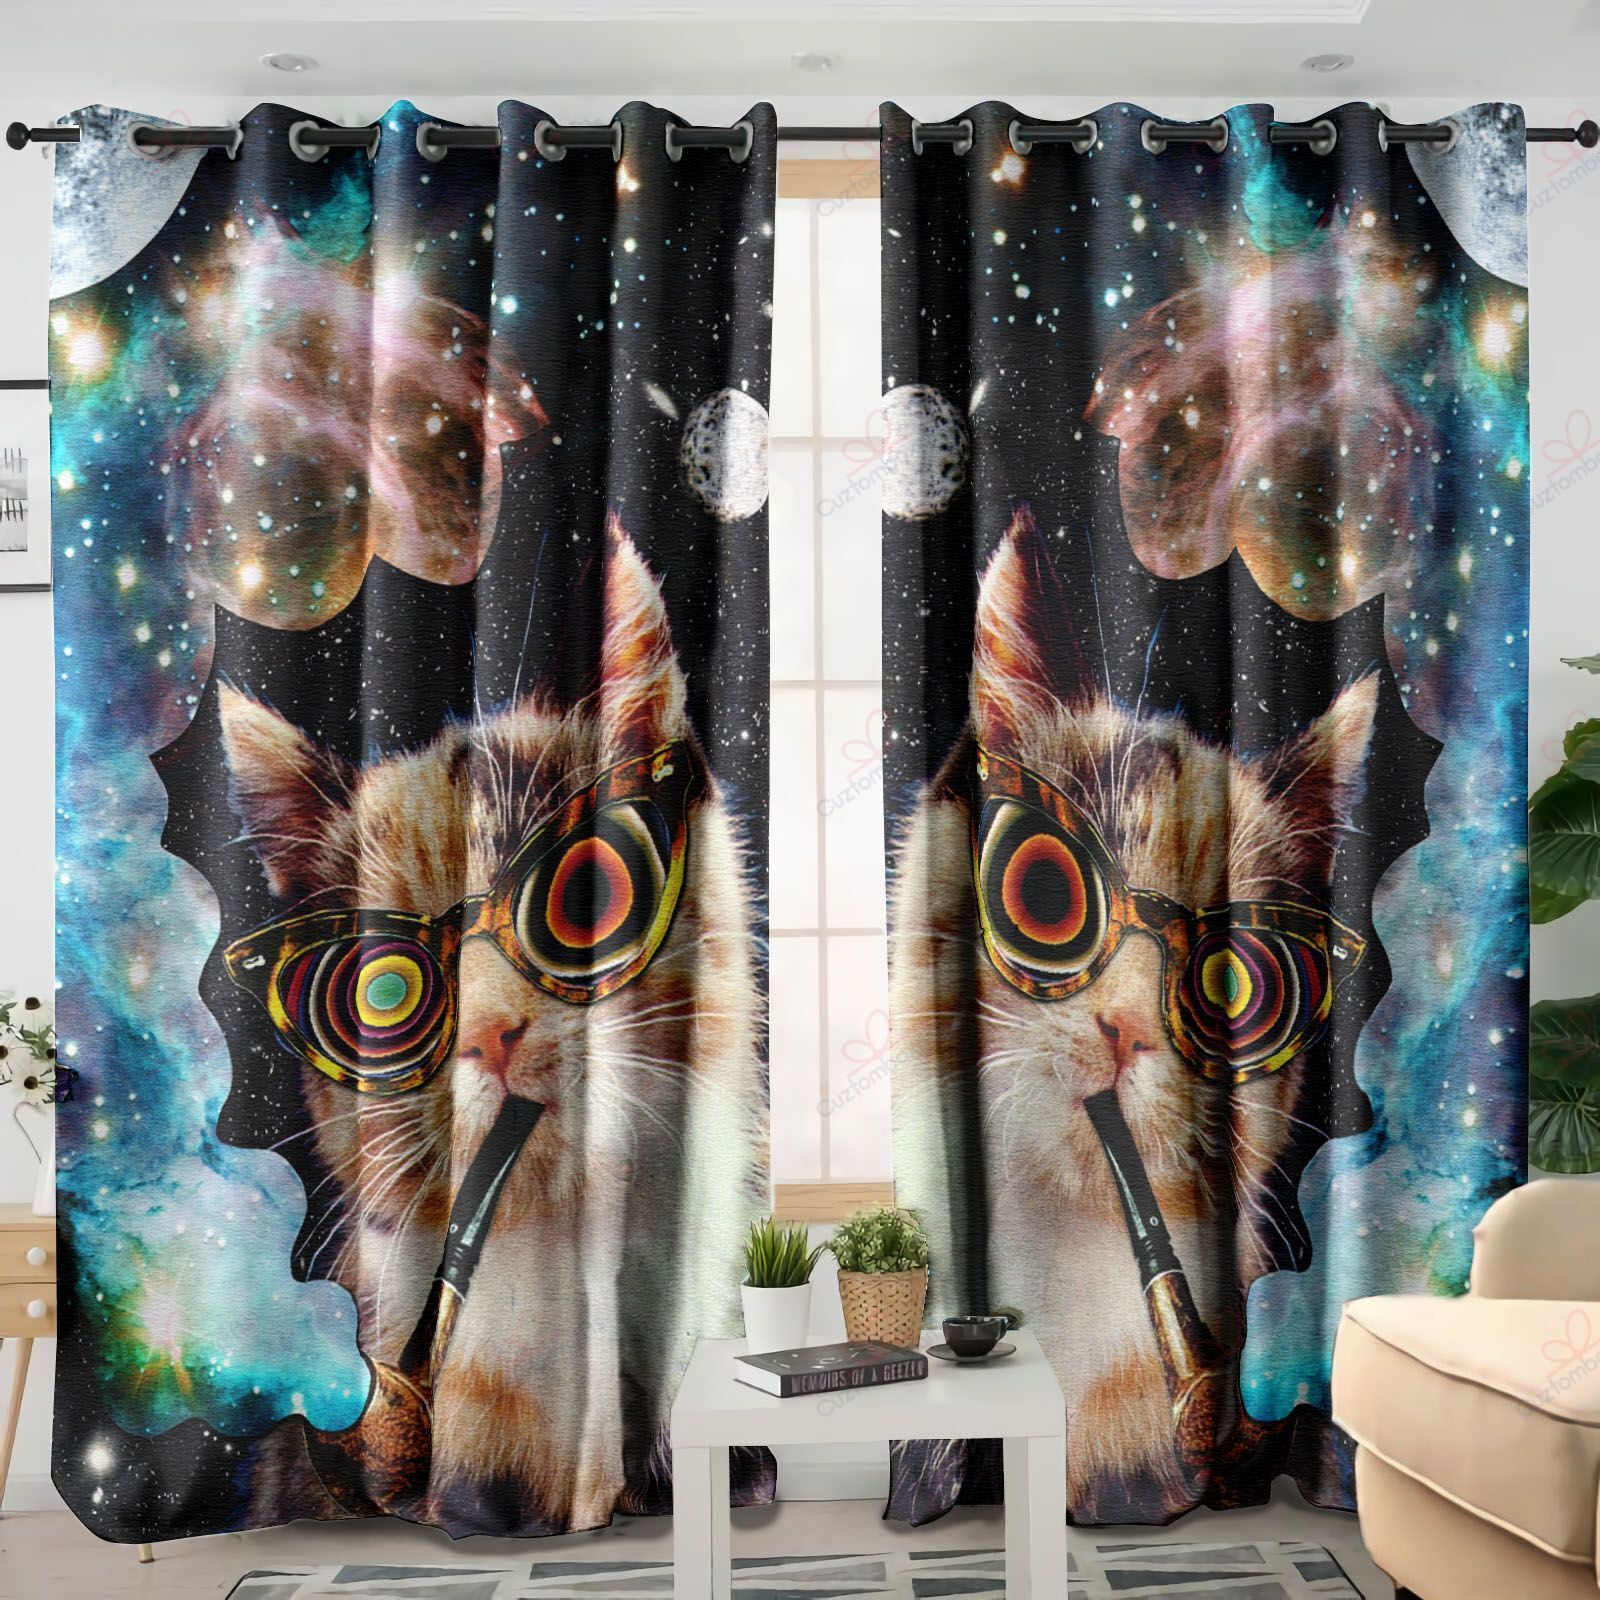 Galaxy Cat Moon Window Curtain Home Decor